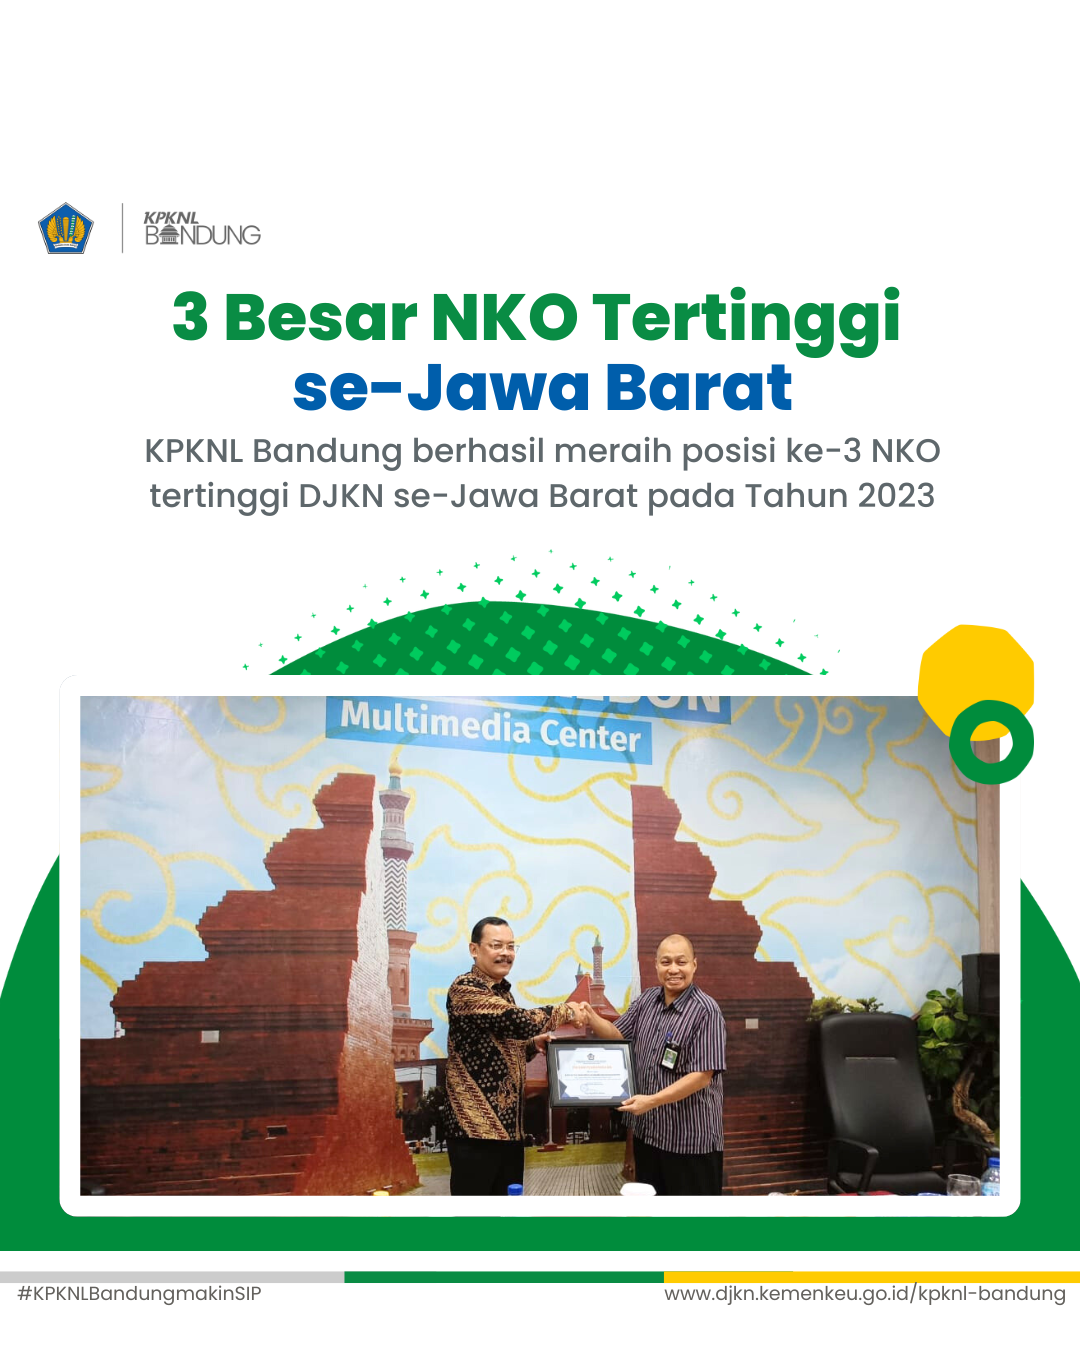 Raih Peringkat 3 NKO Tertinggi Tahun 2023 se-Jawa Barat, KPKNL Bandung Terima Penghargaan